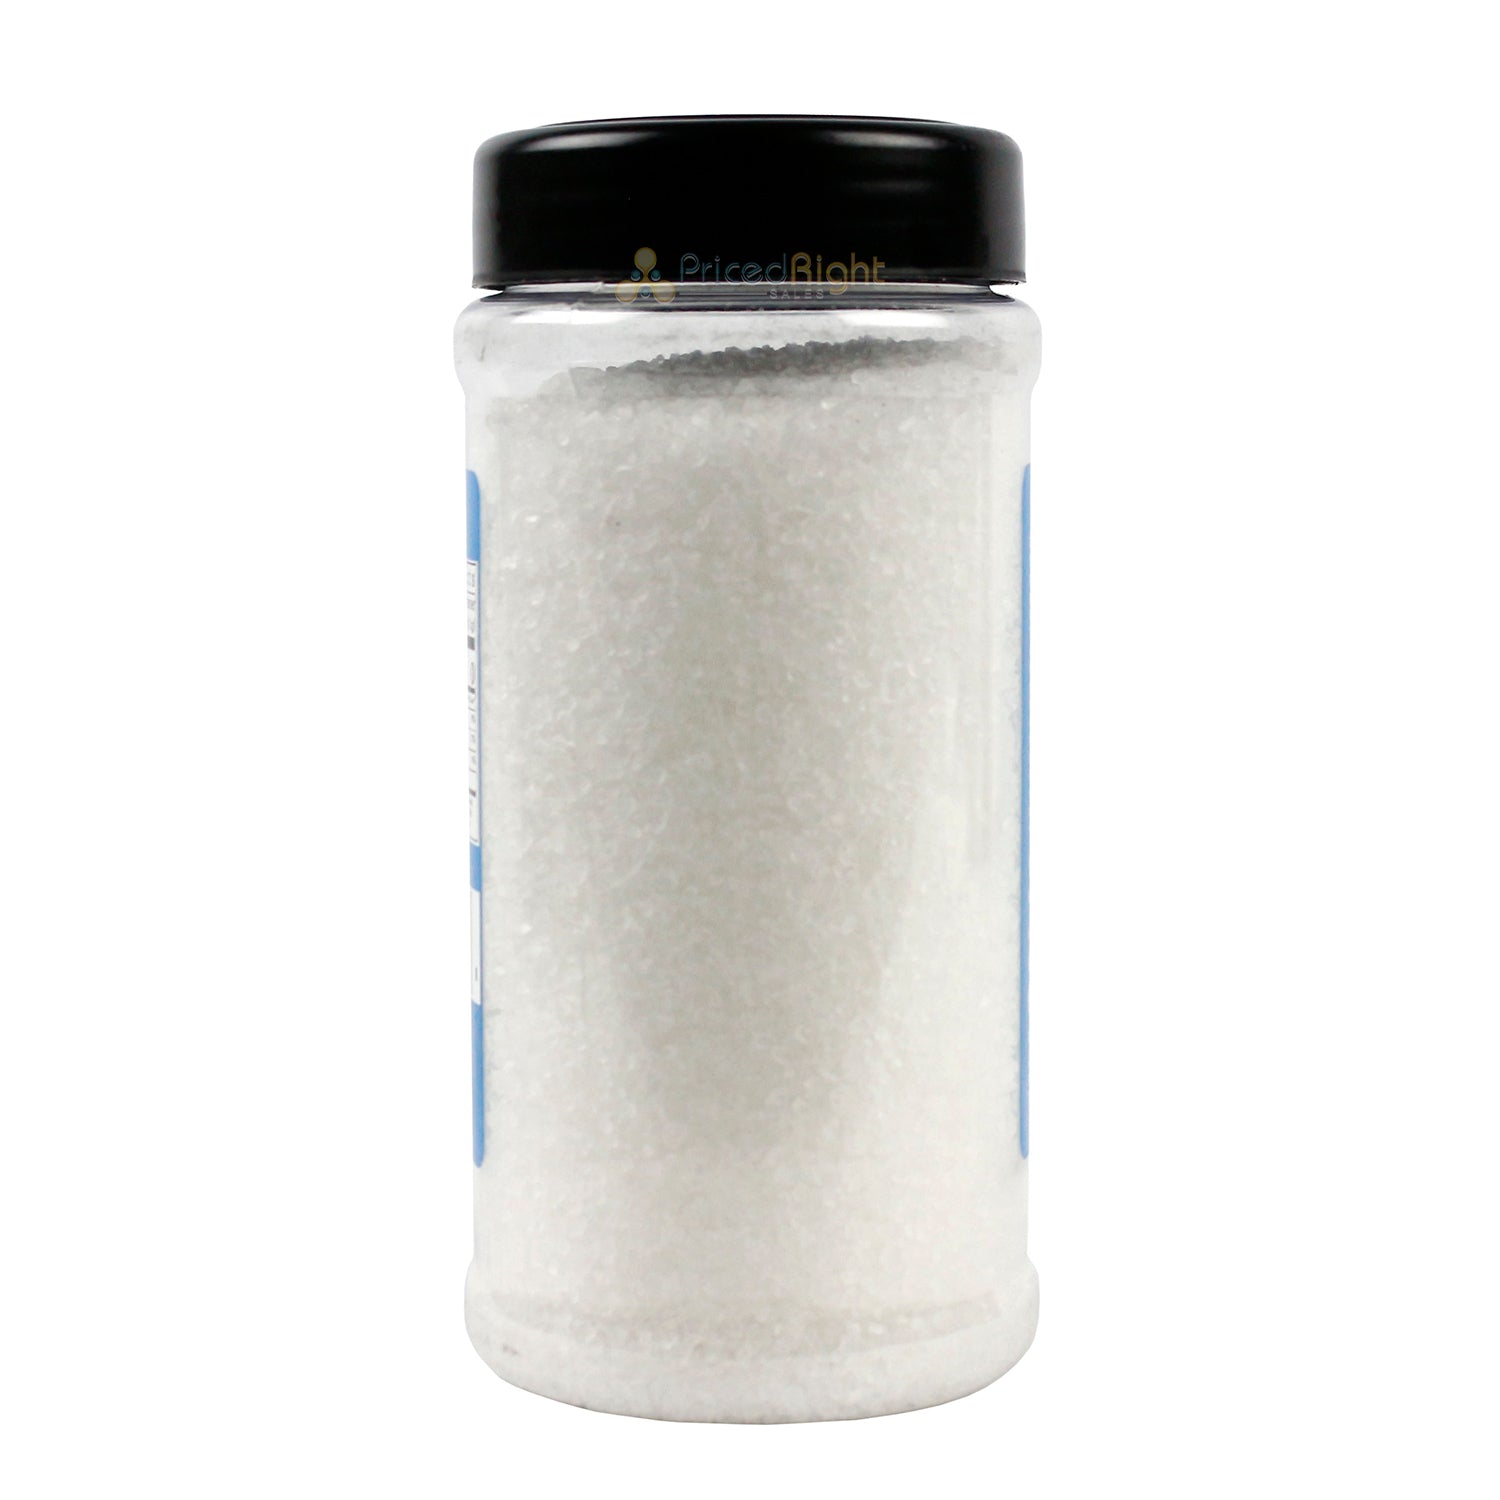 Frugoni Grilling Salt Coarse Grill Grain Sea Salt Enhance Natural Flavors 17 oz